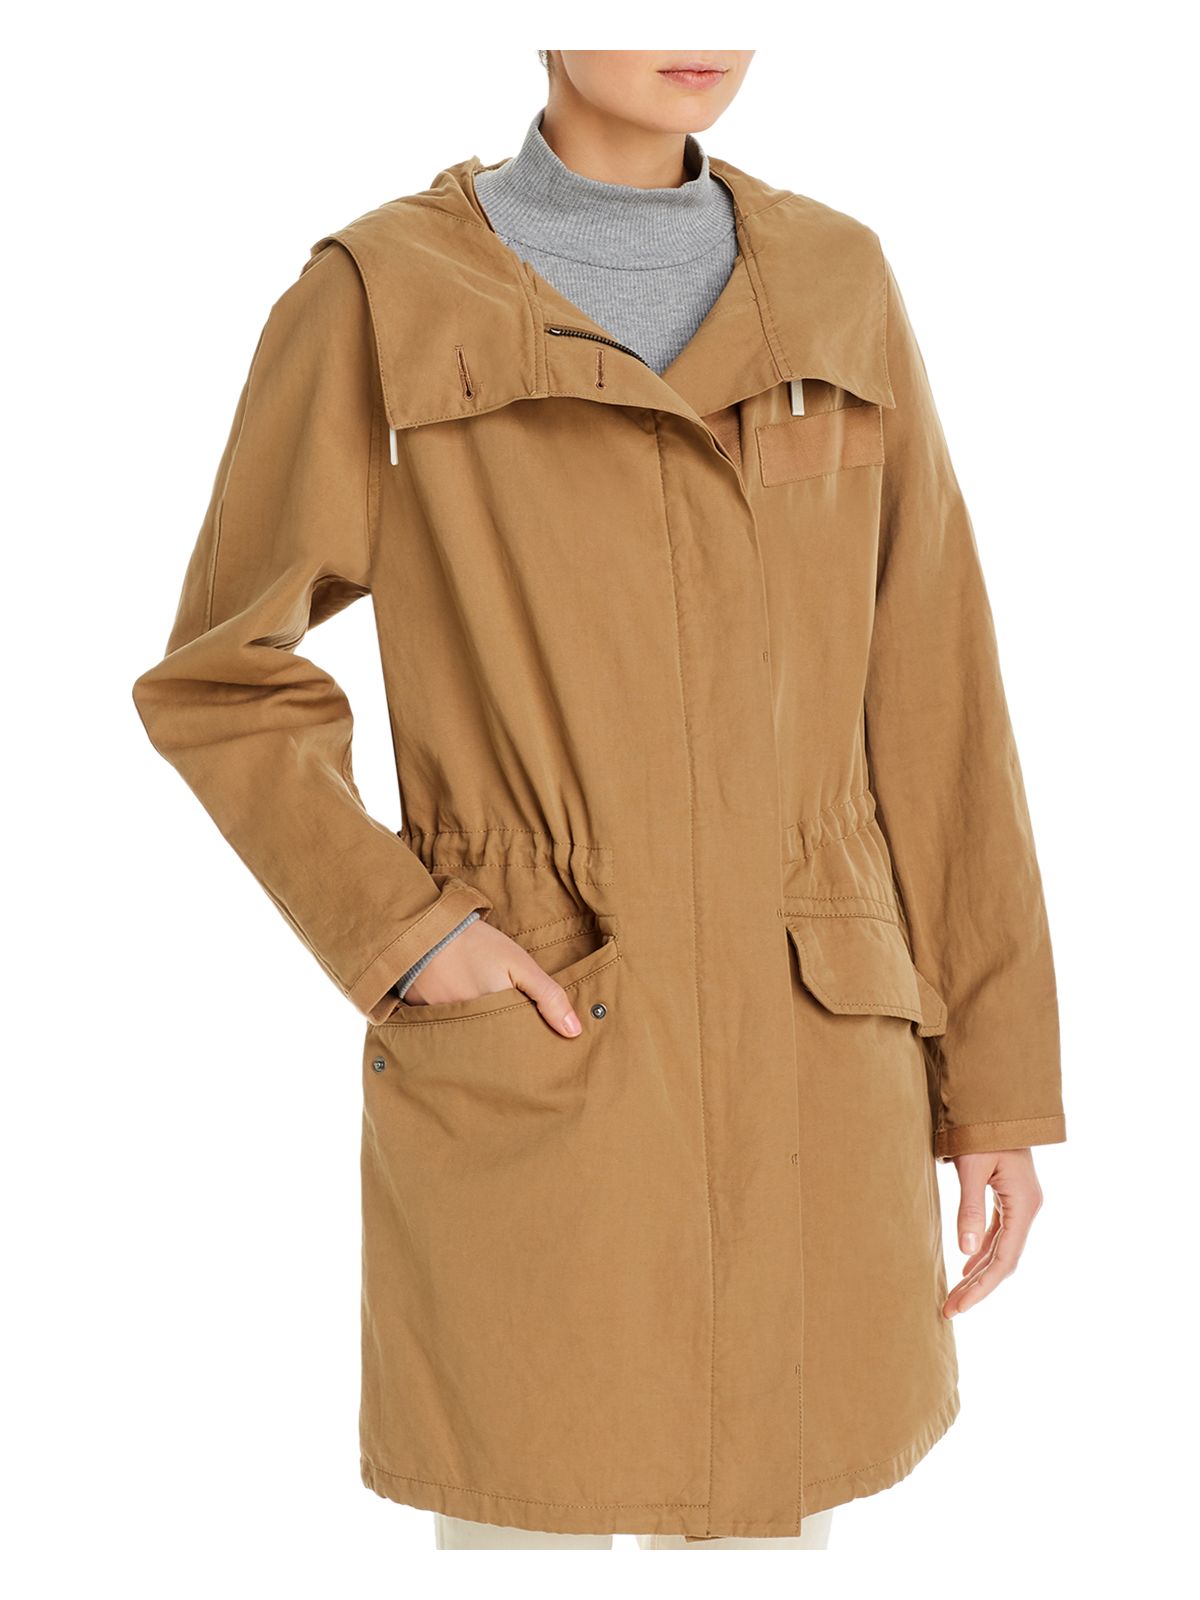 YS ARMY Womens Brown Zip Up Winter Jacket Coat 34